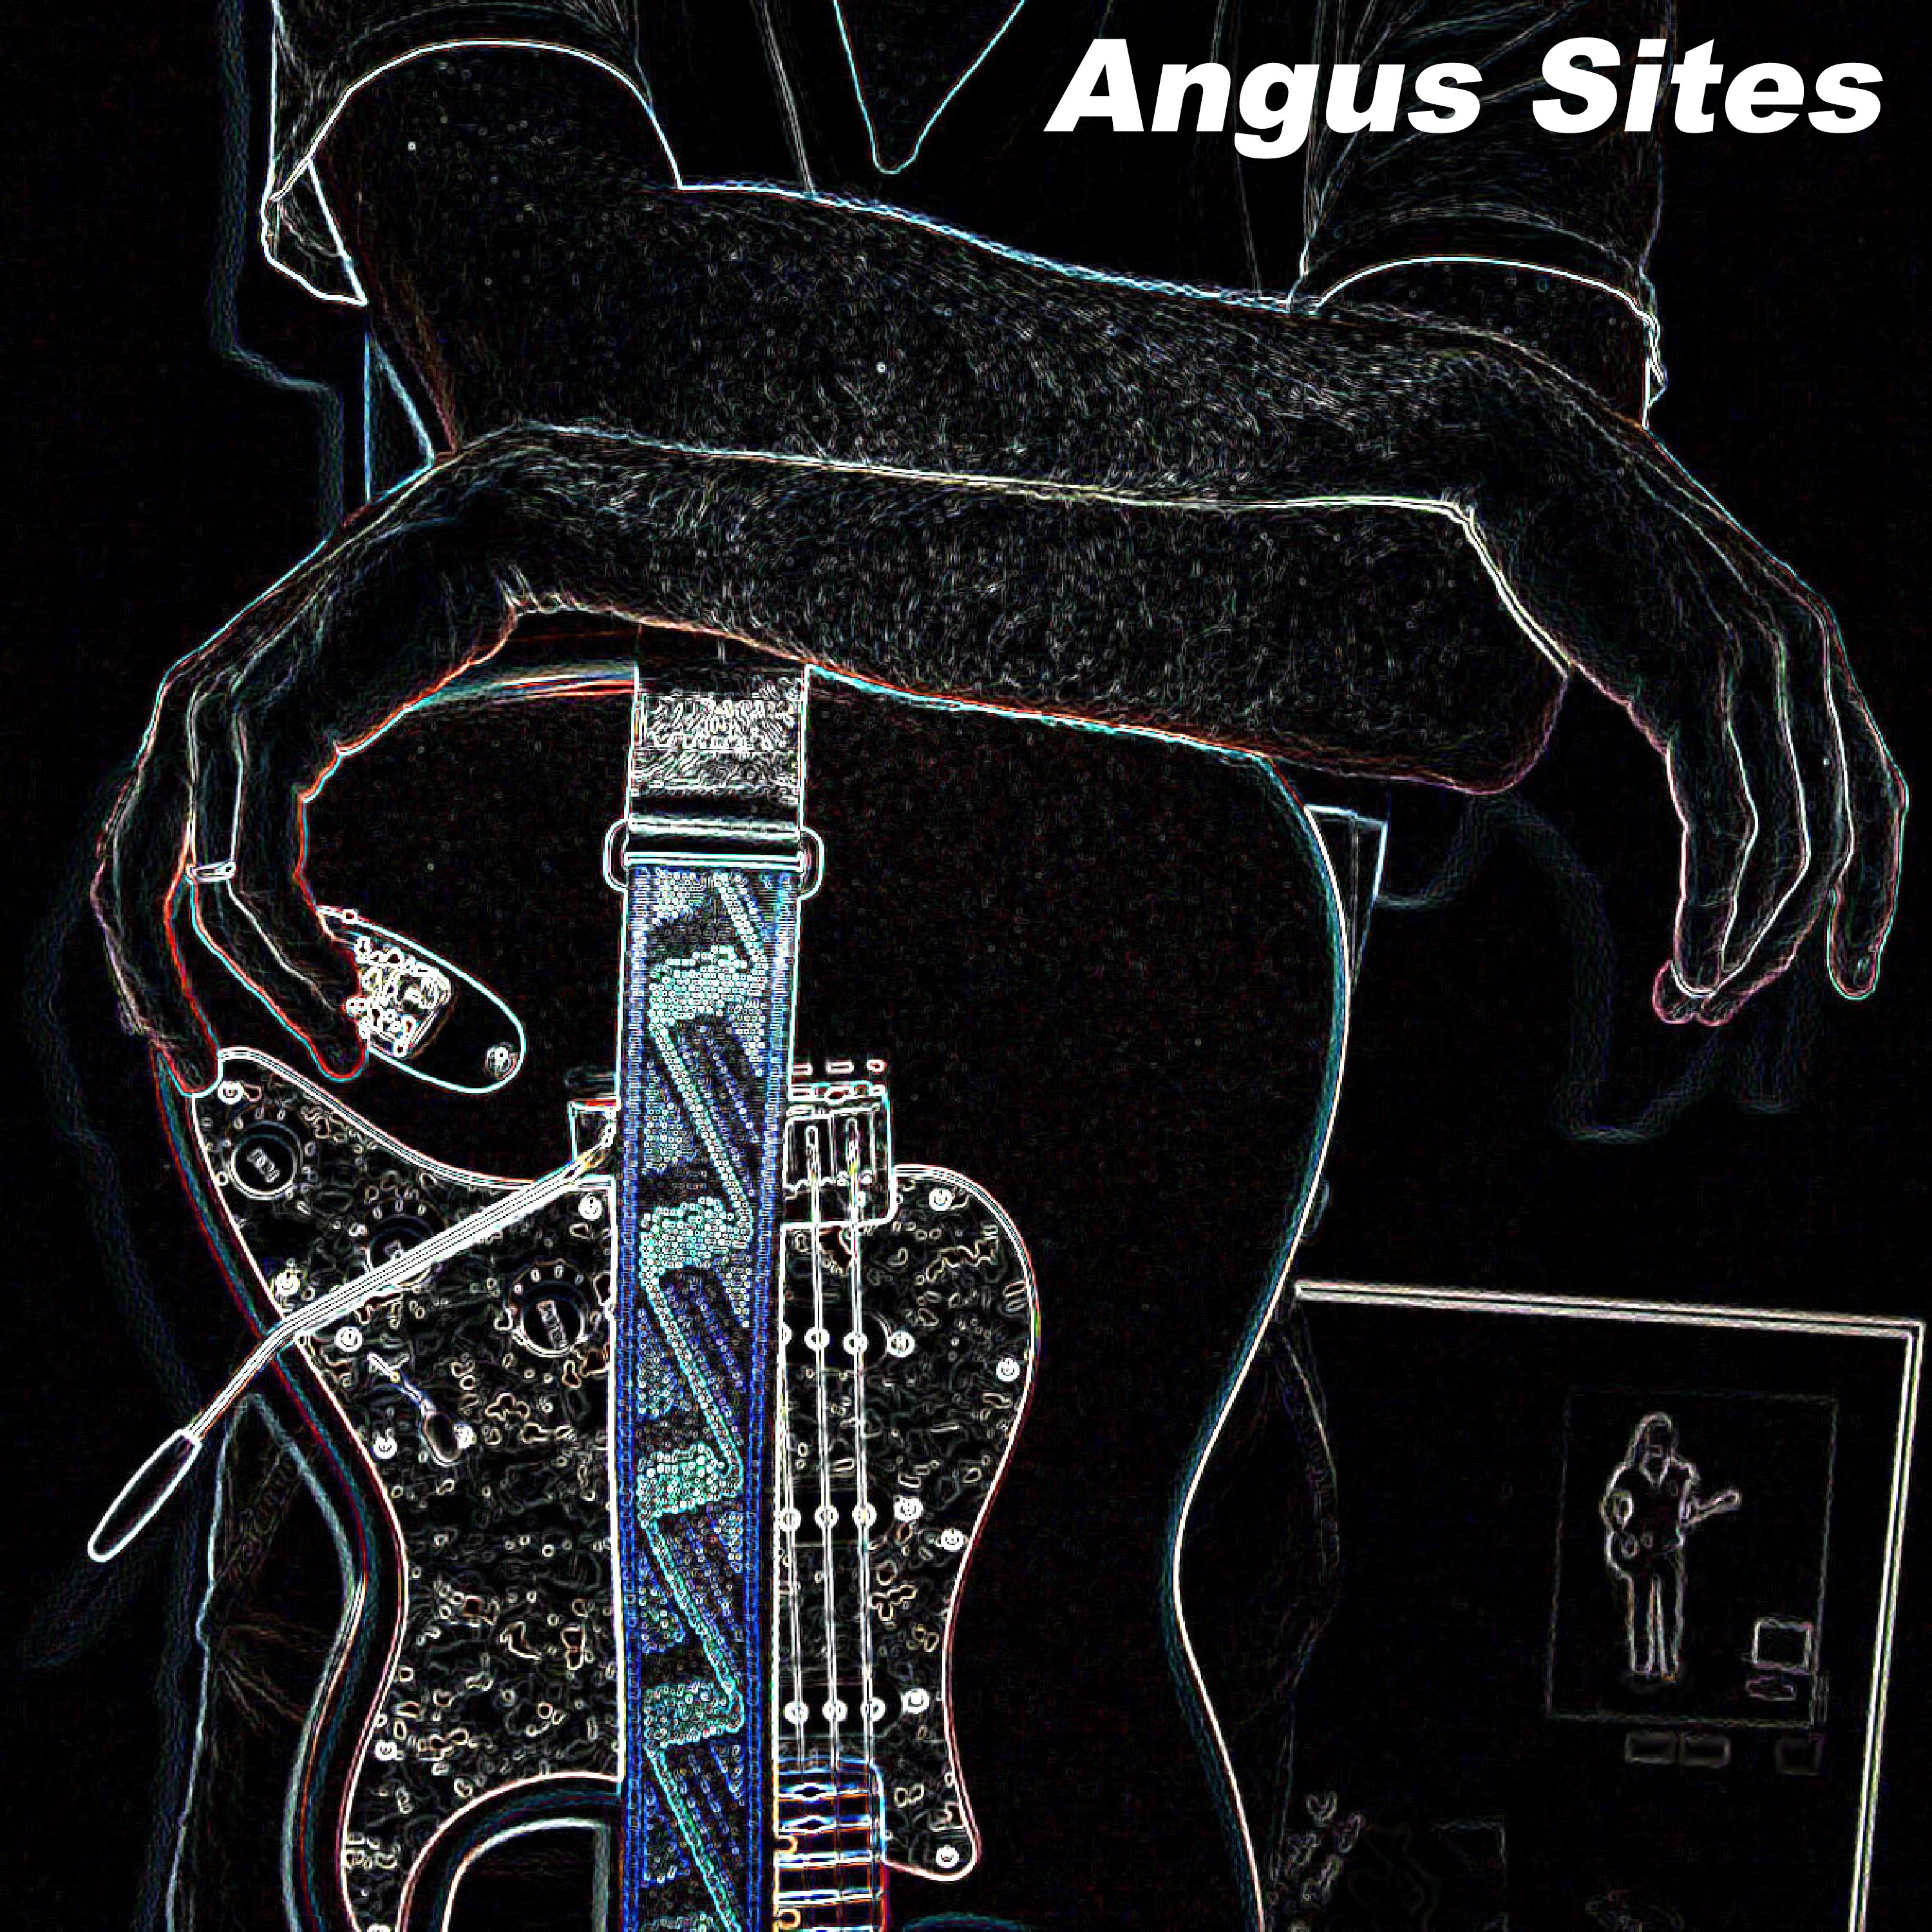 Angus Sites Instrumental Hard Rock Album, "Houston" Showcases the Musician’s Talent